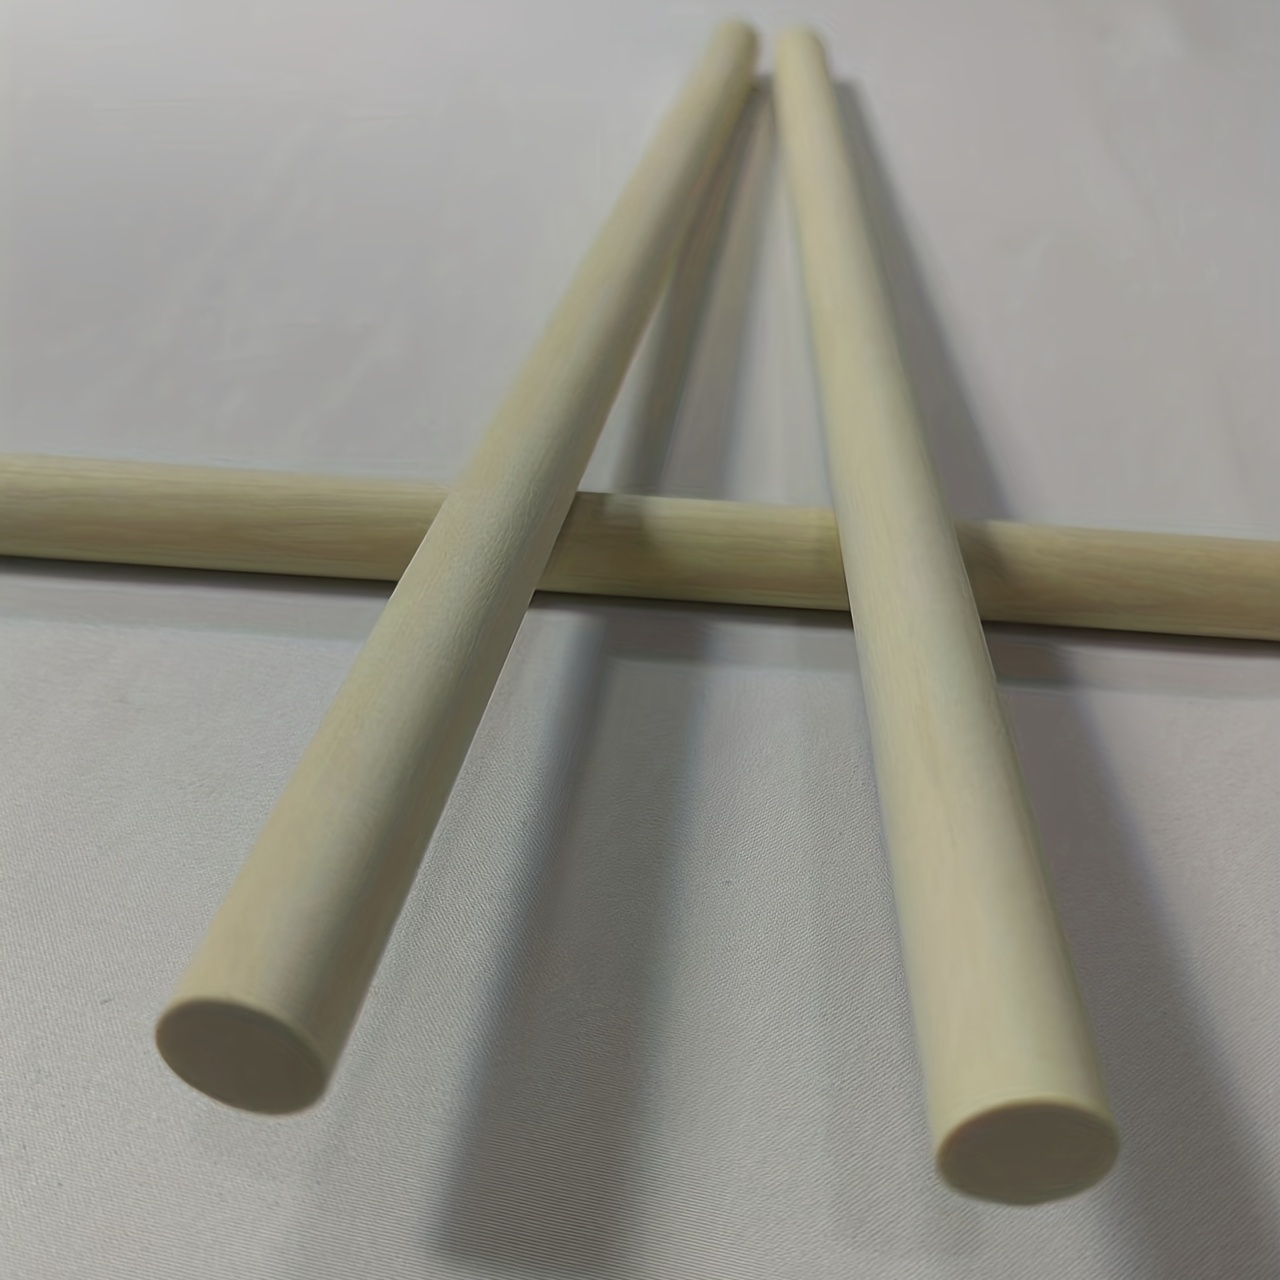 6pcs 0.8 X 12 Inch Wooden Dowel Rods Wood Sticks Natural Unfinished Wooden  Dowel Sticks Round Wood Dowels For Crafts DIY